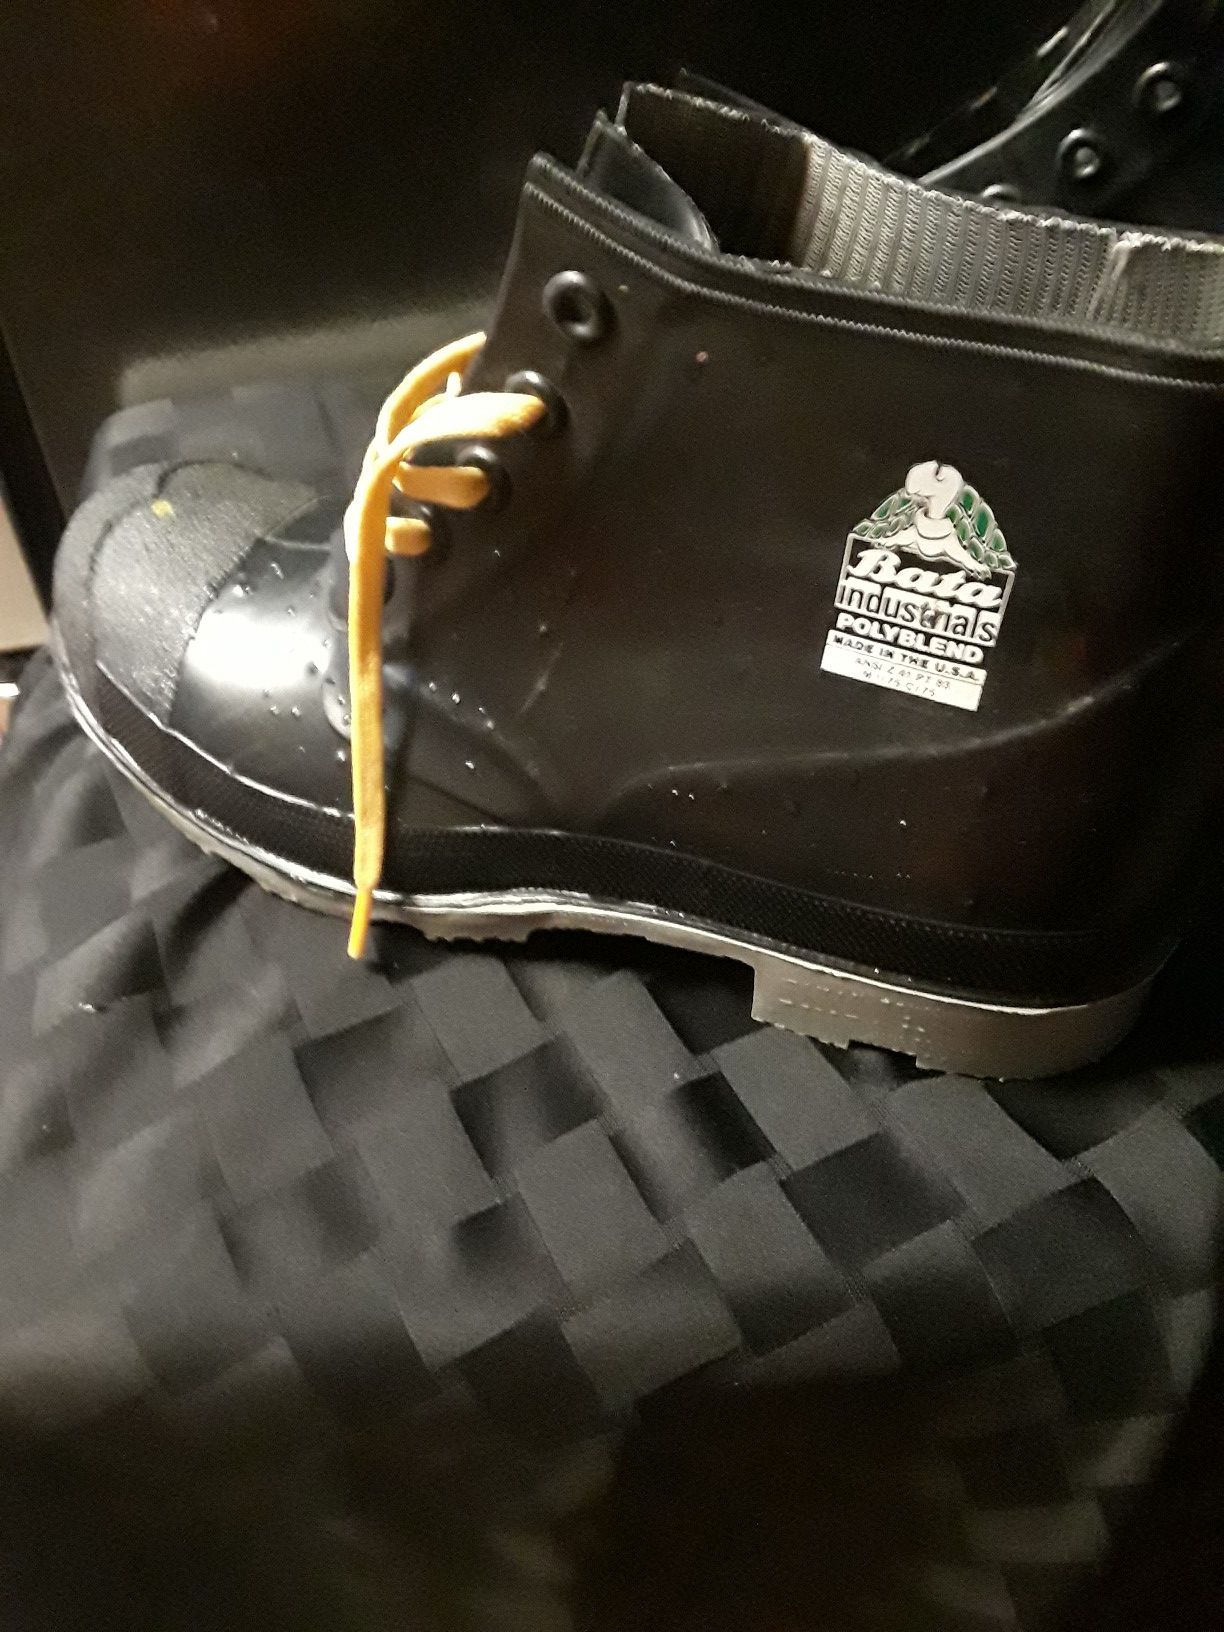 Beta Industrial rain boots